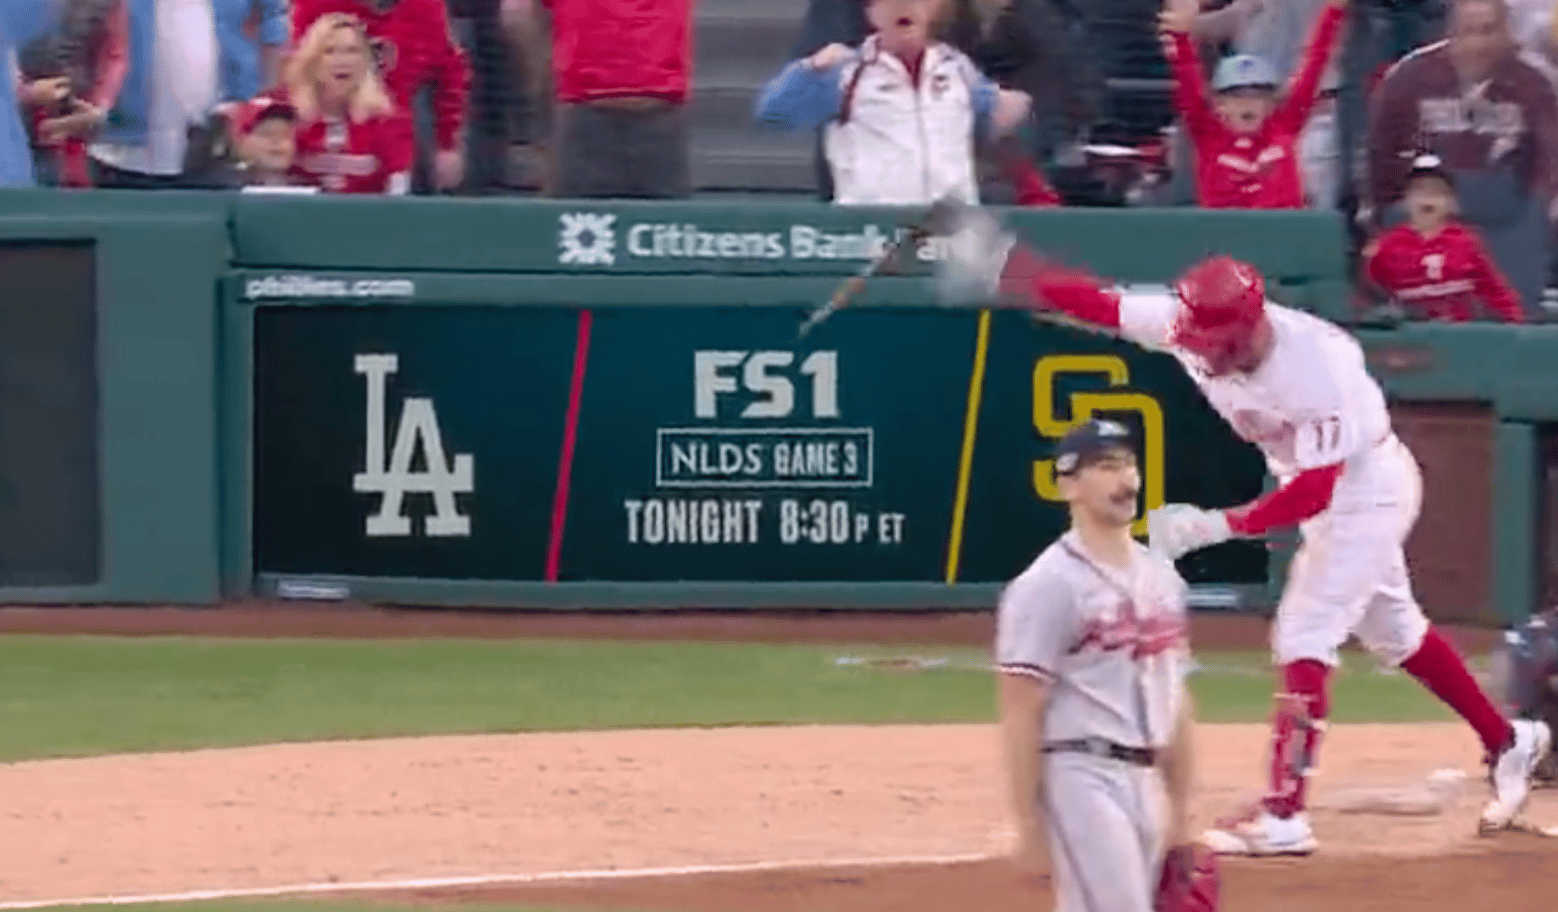 Looks Like MLB: The Show is Adding Rhys Hoskins’ Bat Spike as a Home Run Celebration